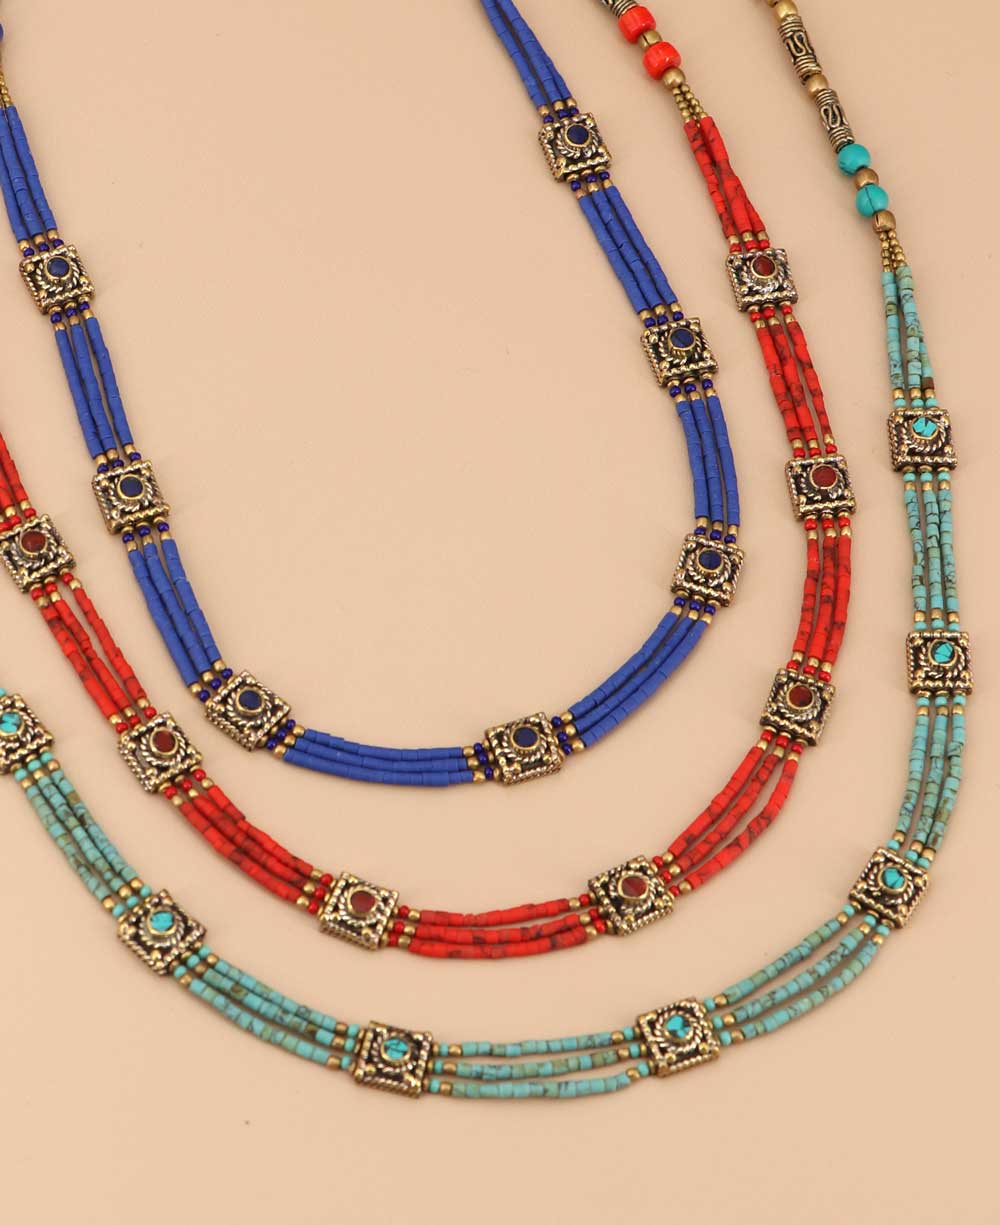 Tibetan Necklace in red, blue, aqua